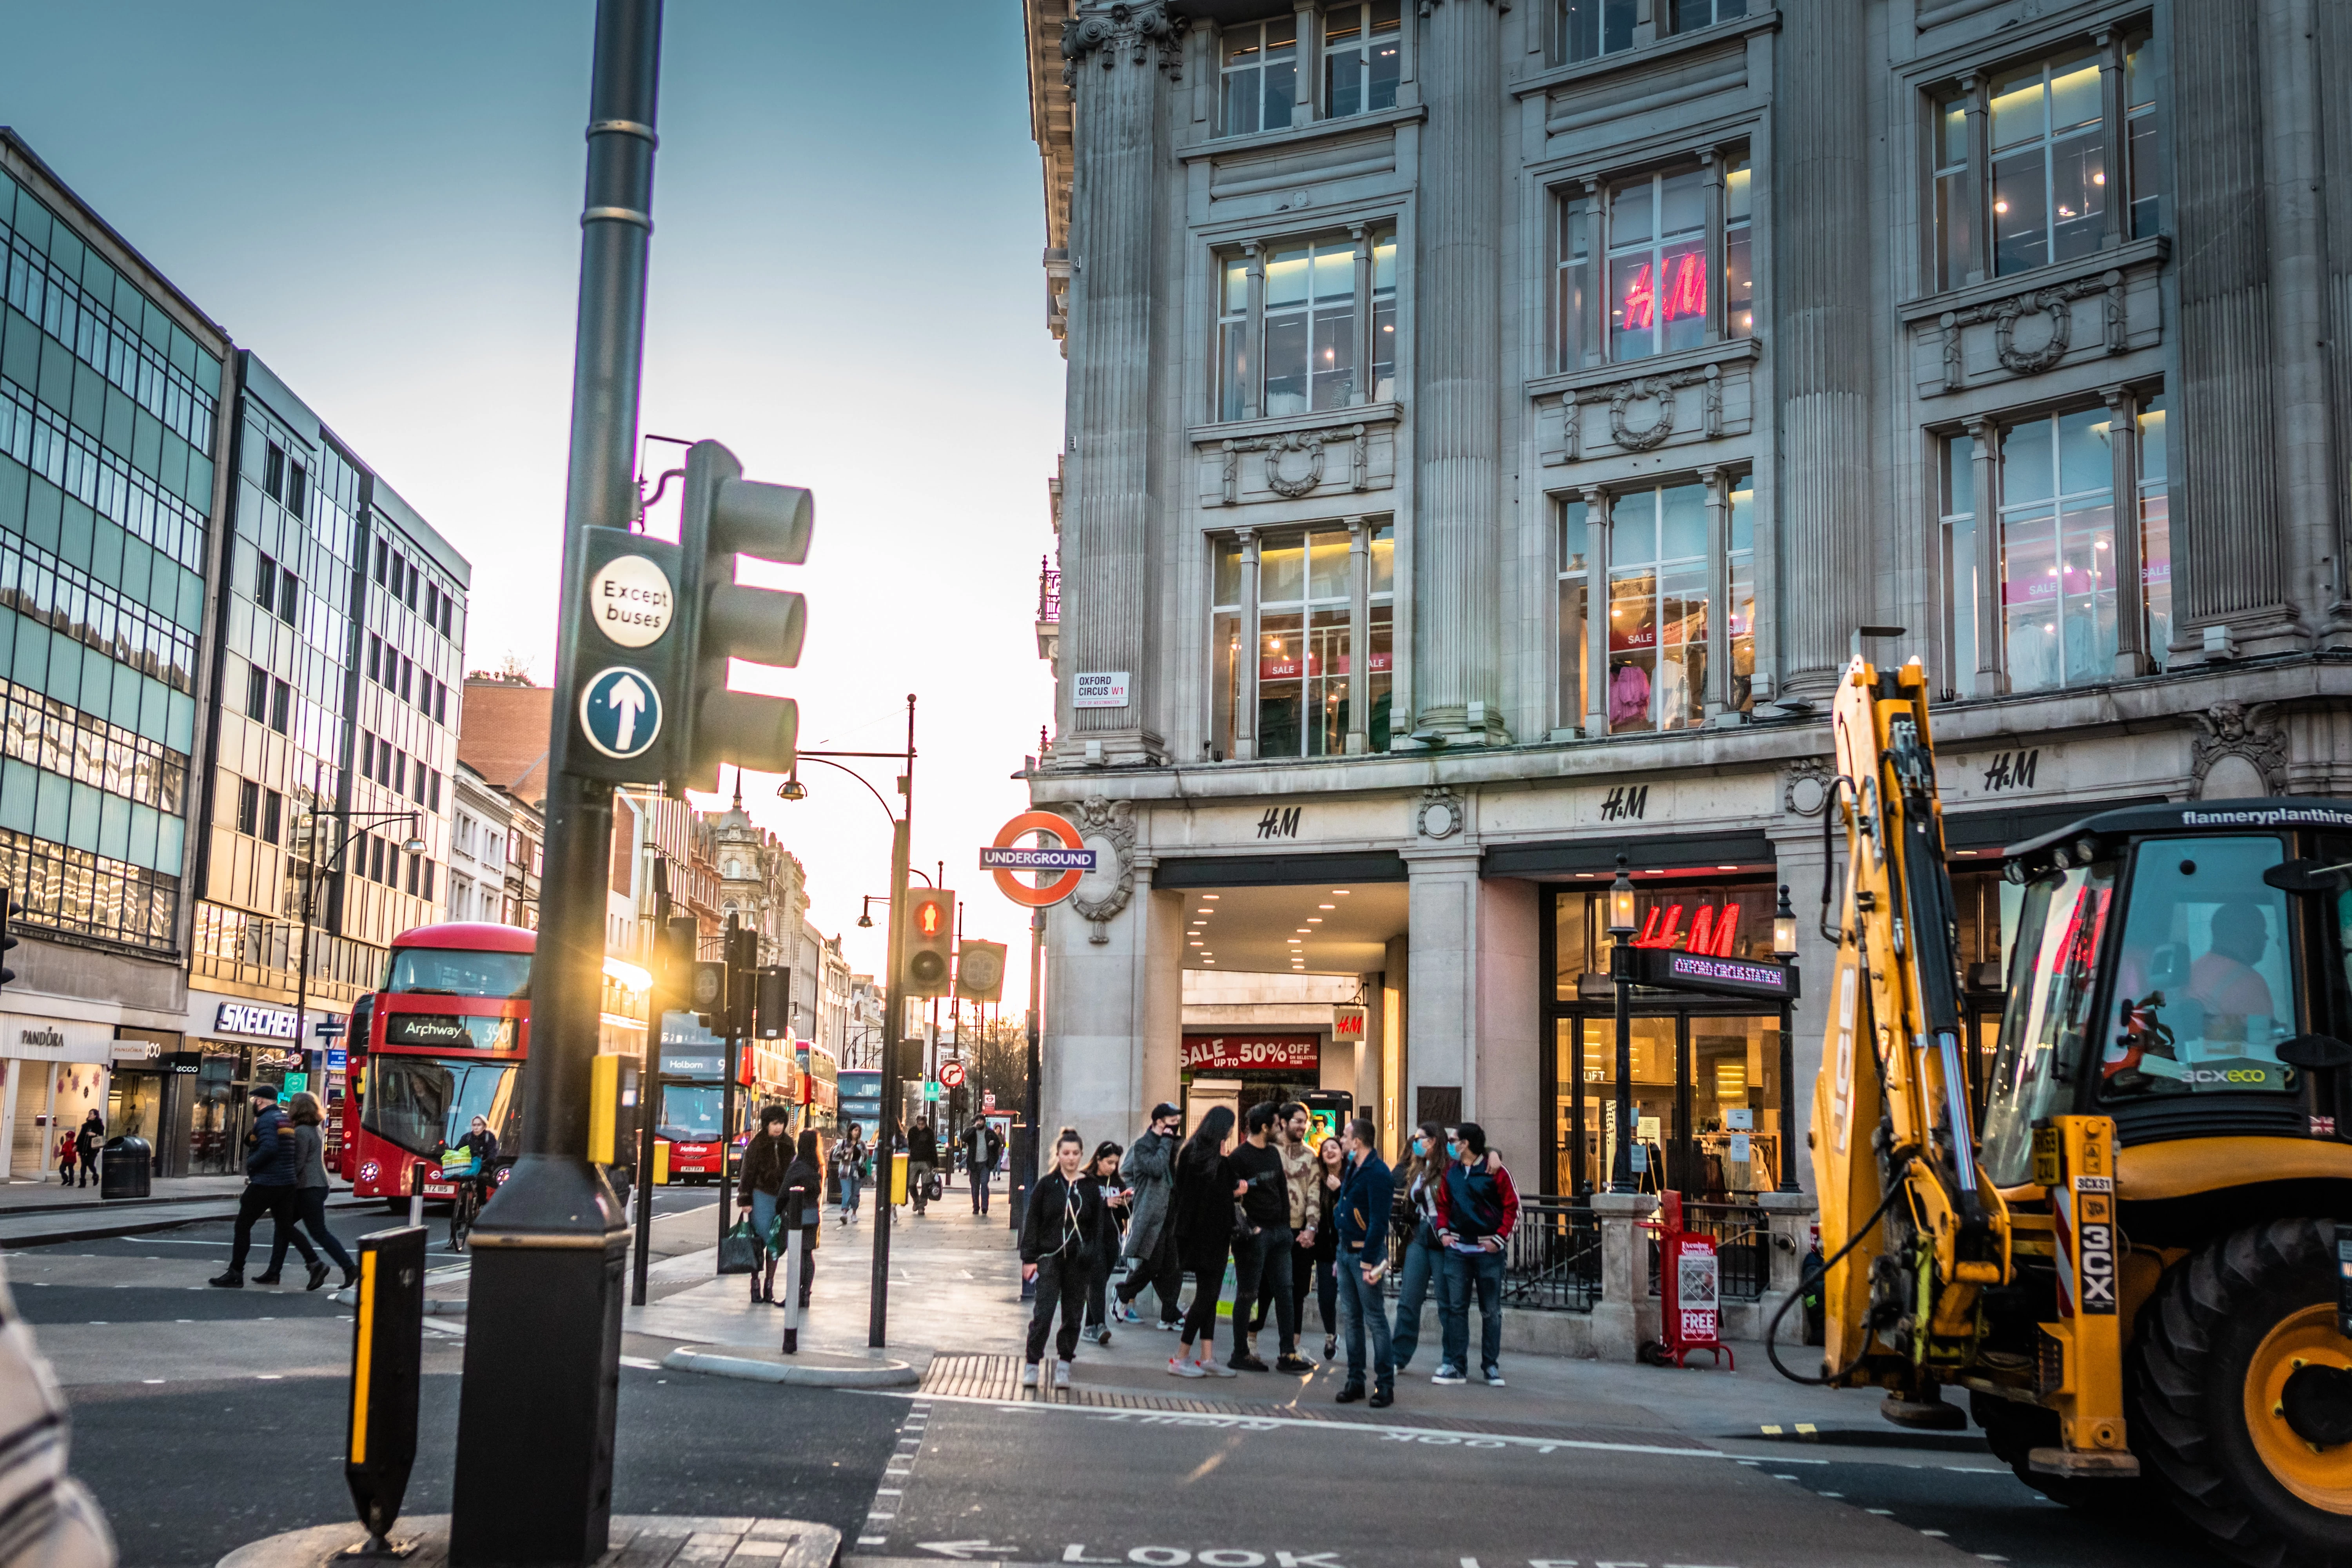 Shoppers on Oxford Street in London